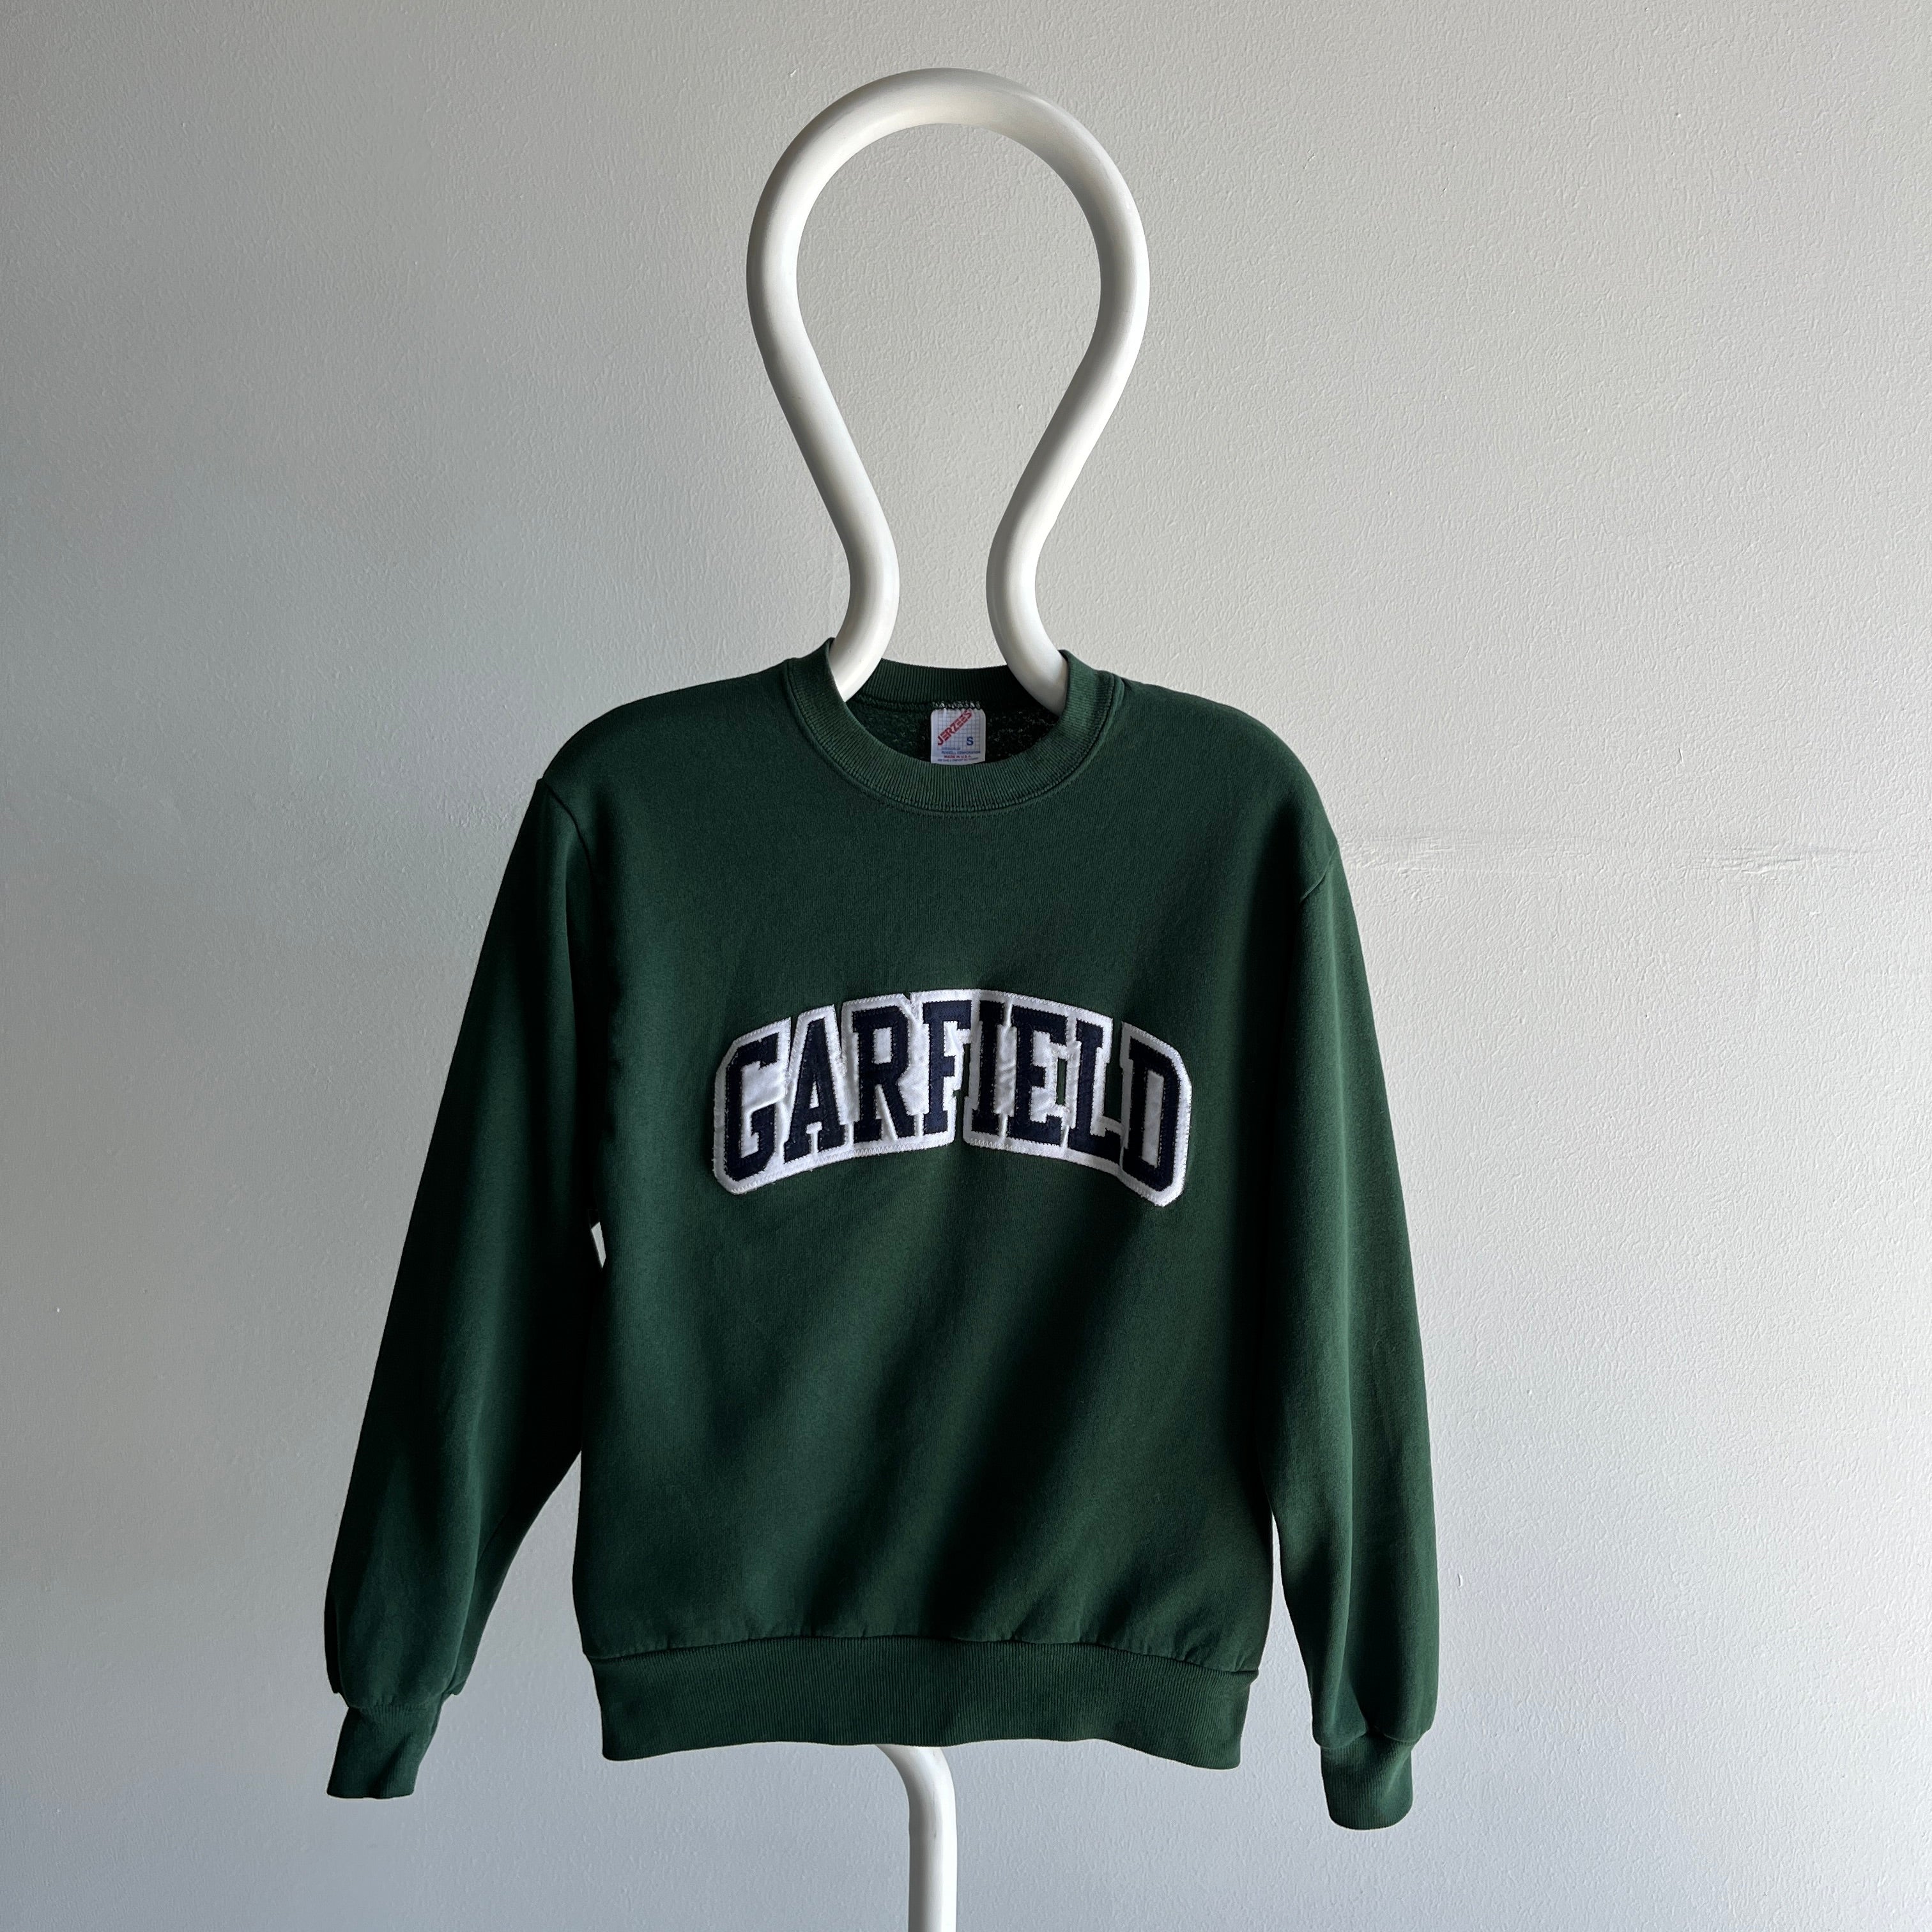 1980/90s Garfield Sweatshirt by Jerzees